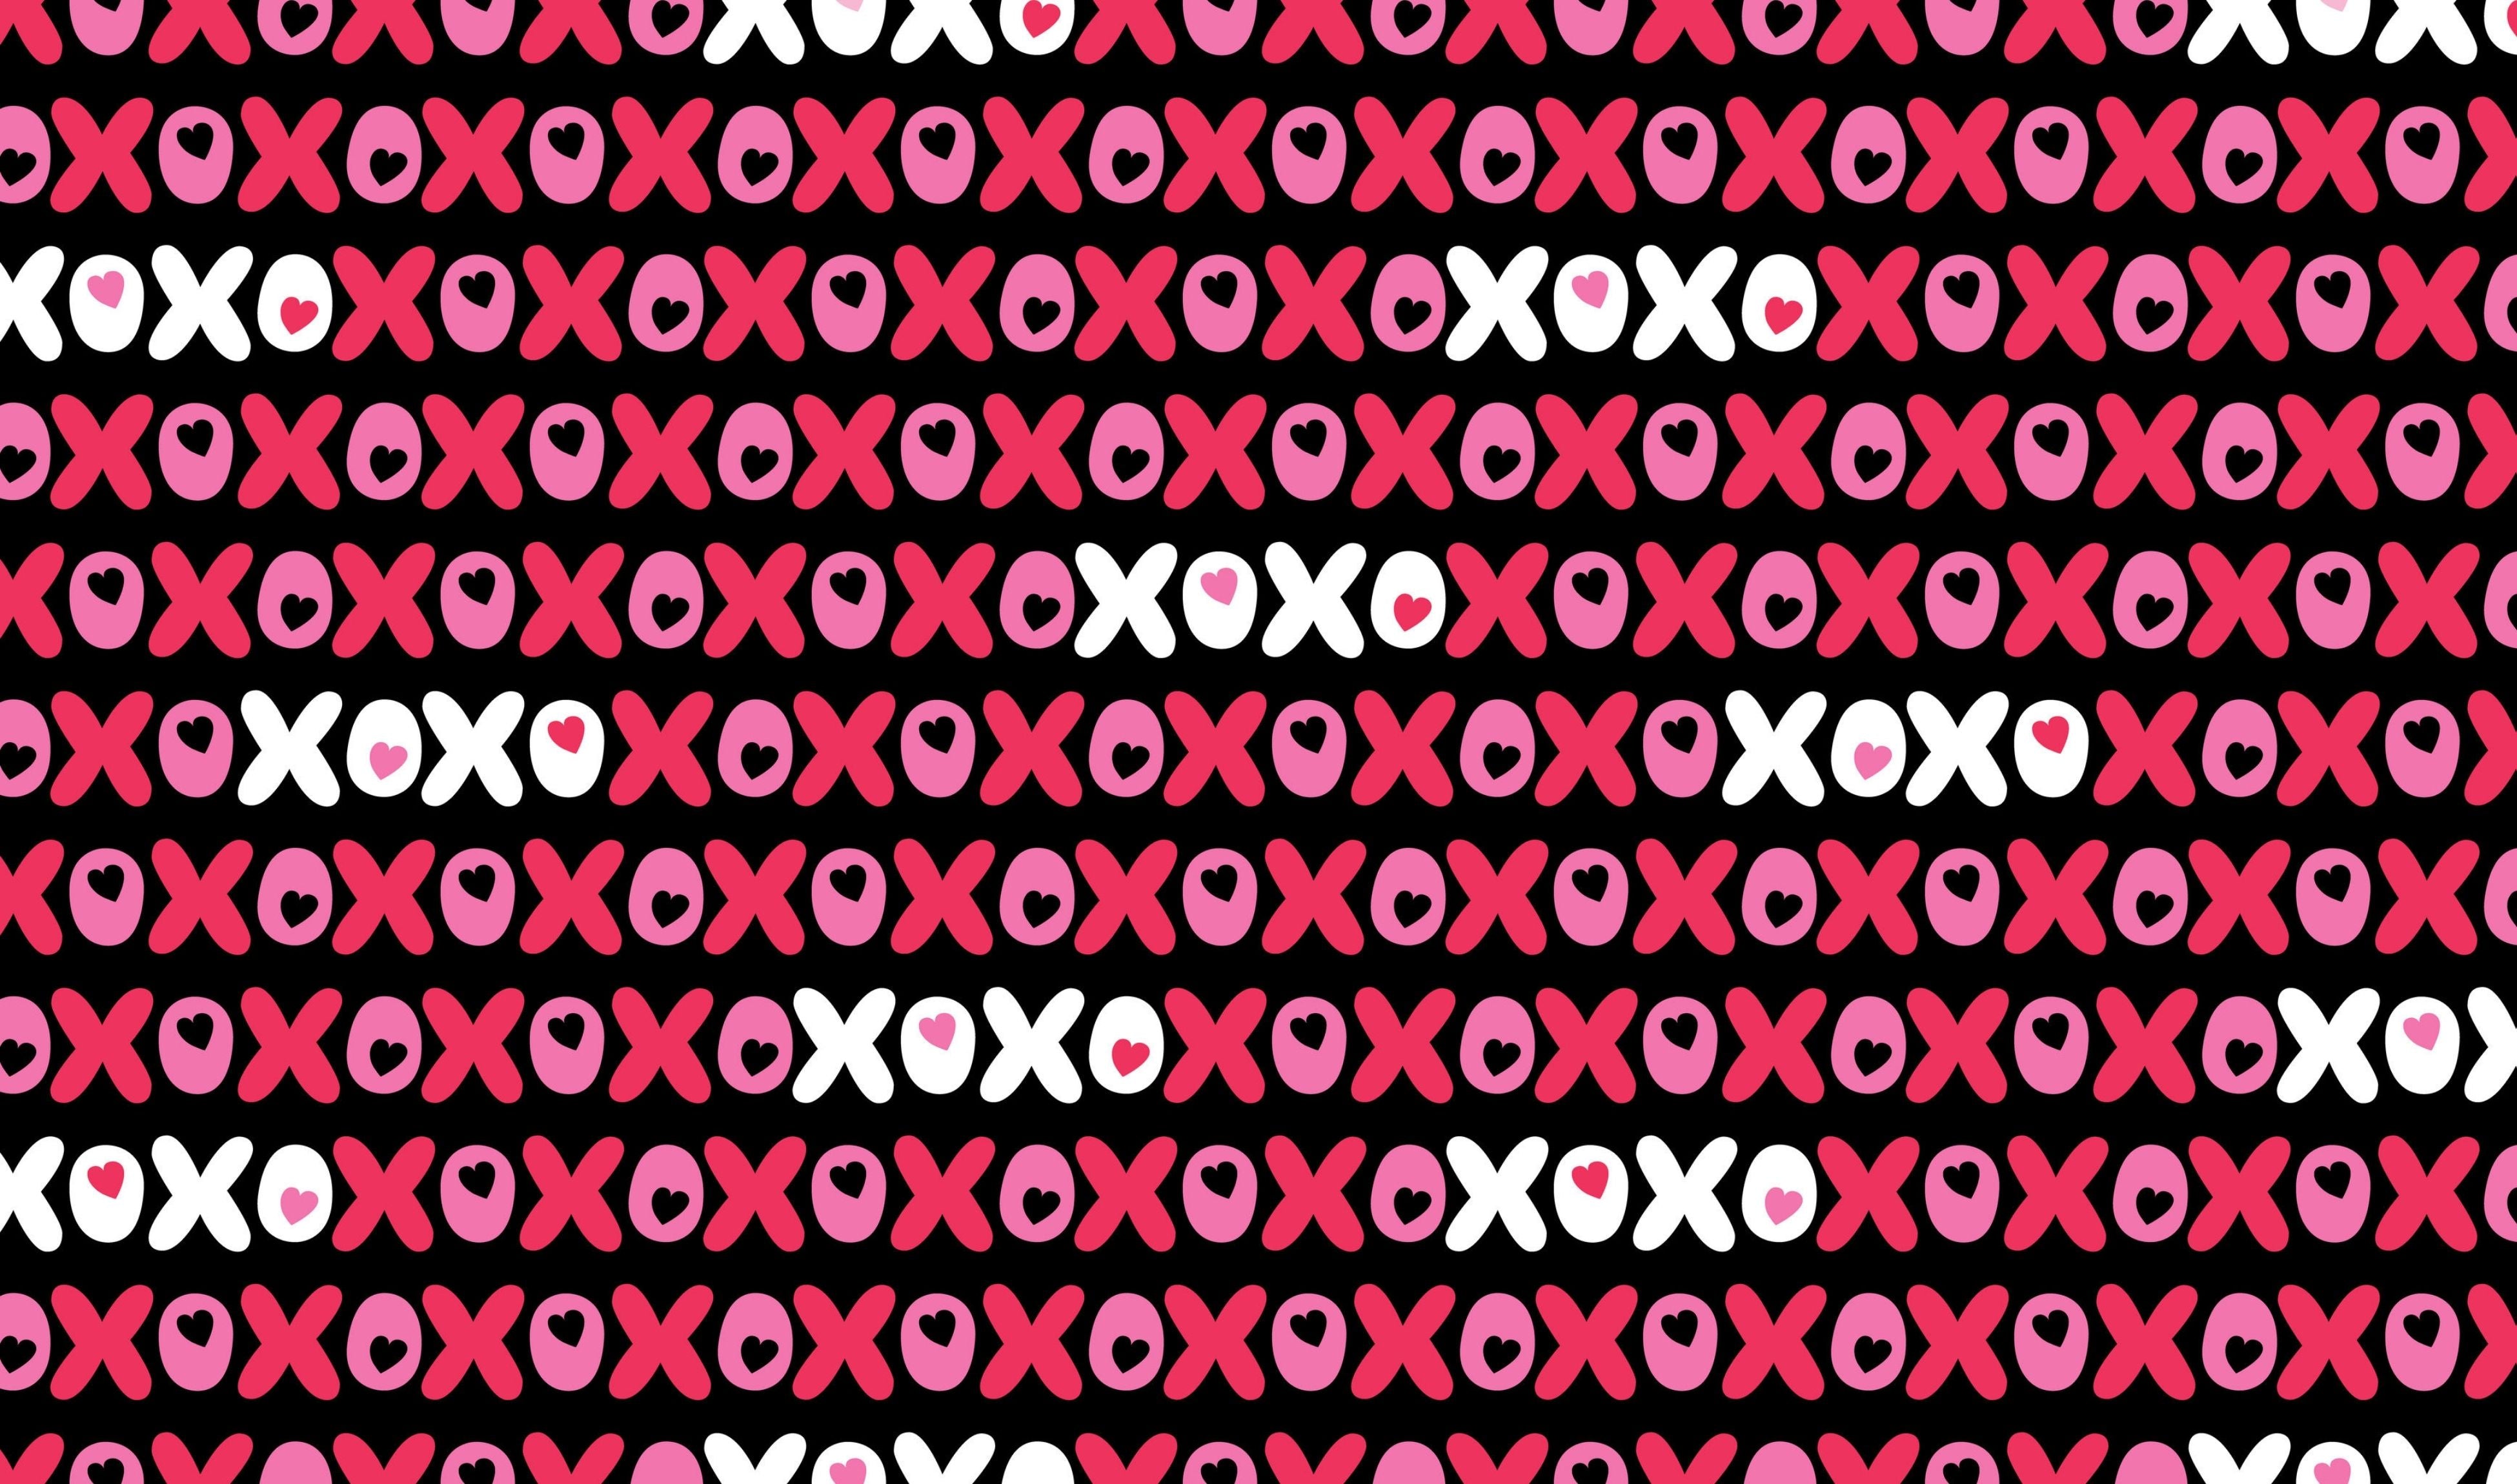 XOXO Hugs and Kisses Pattern Heat Transfer Vinyl